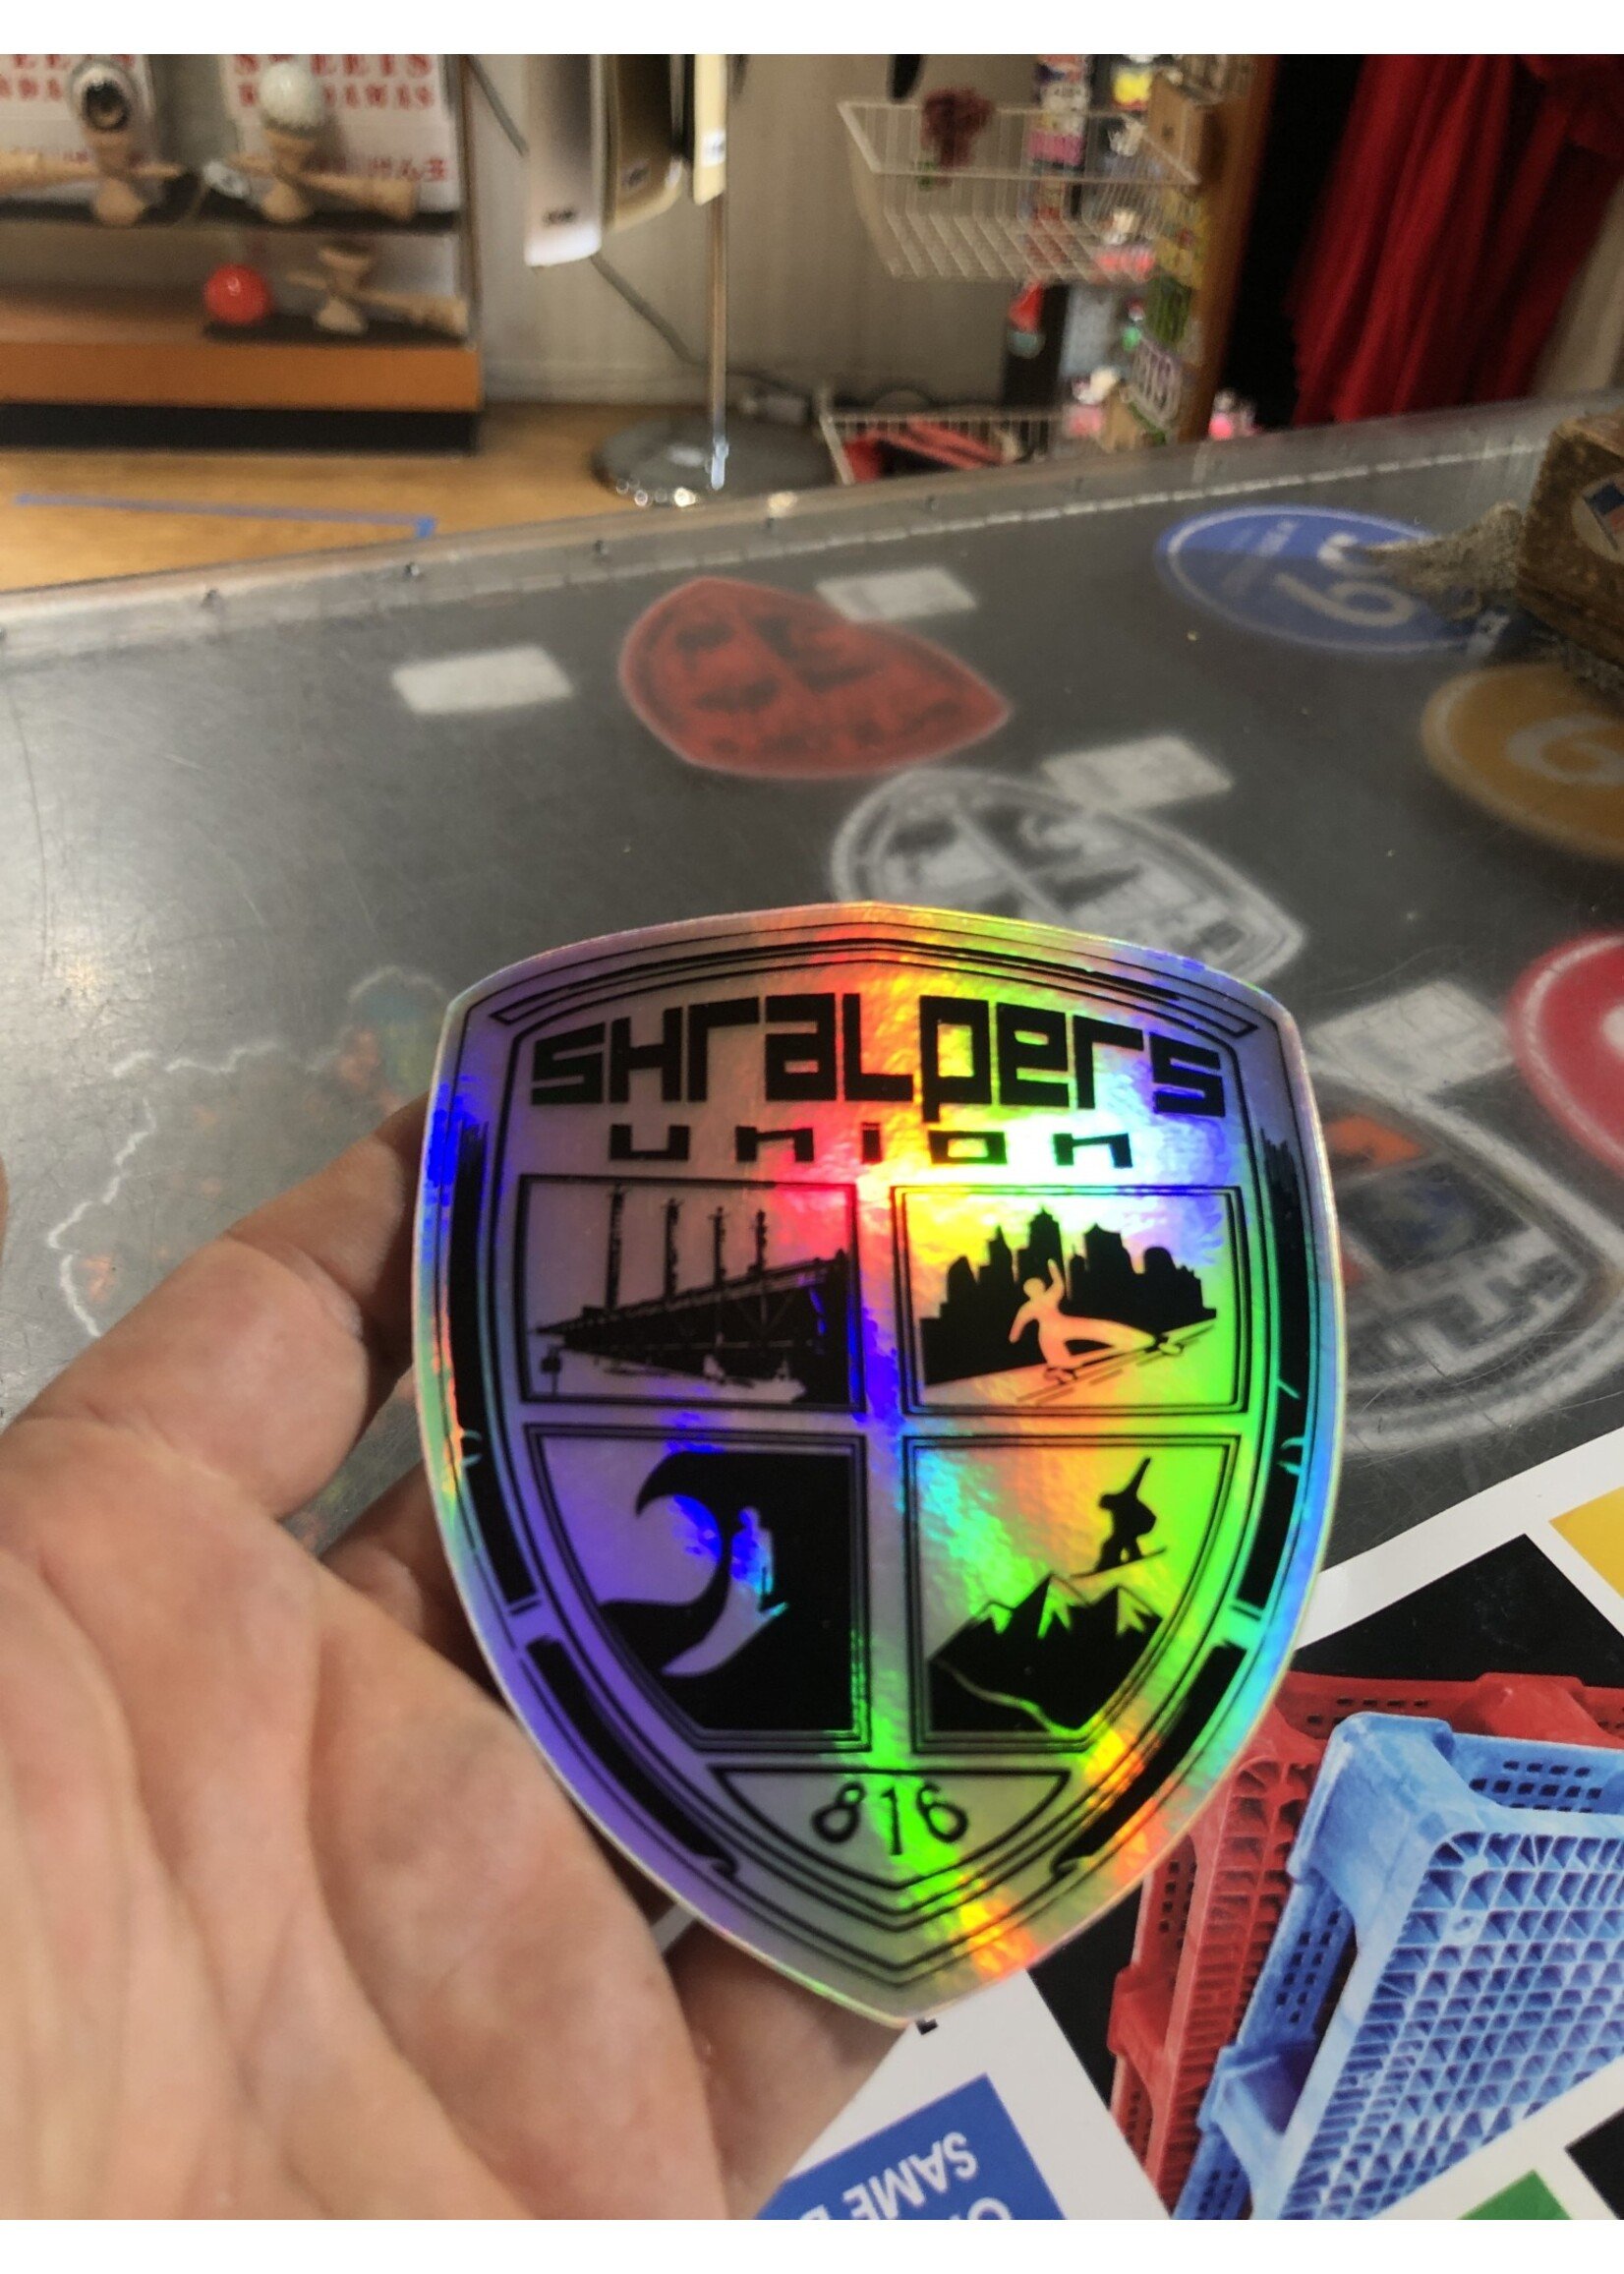 Shralpers Union 816 Shield